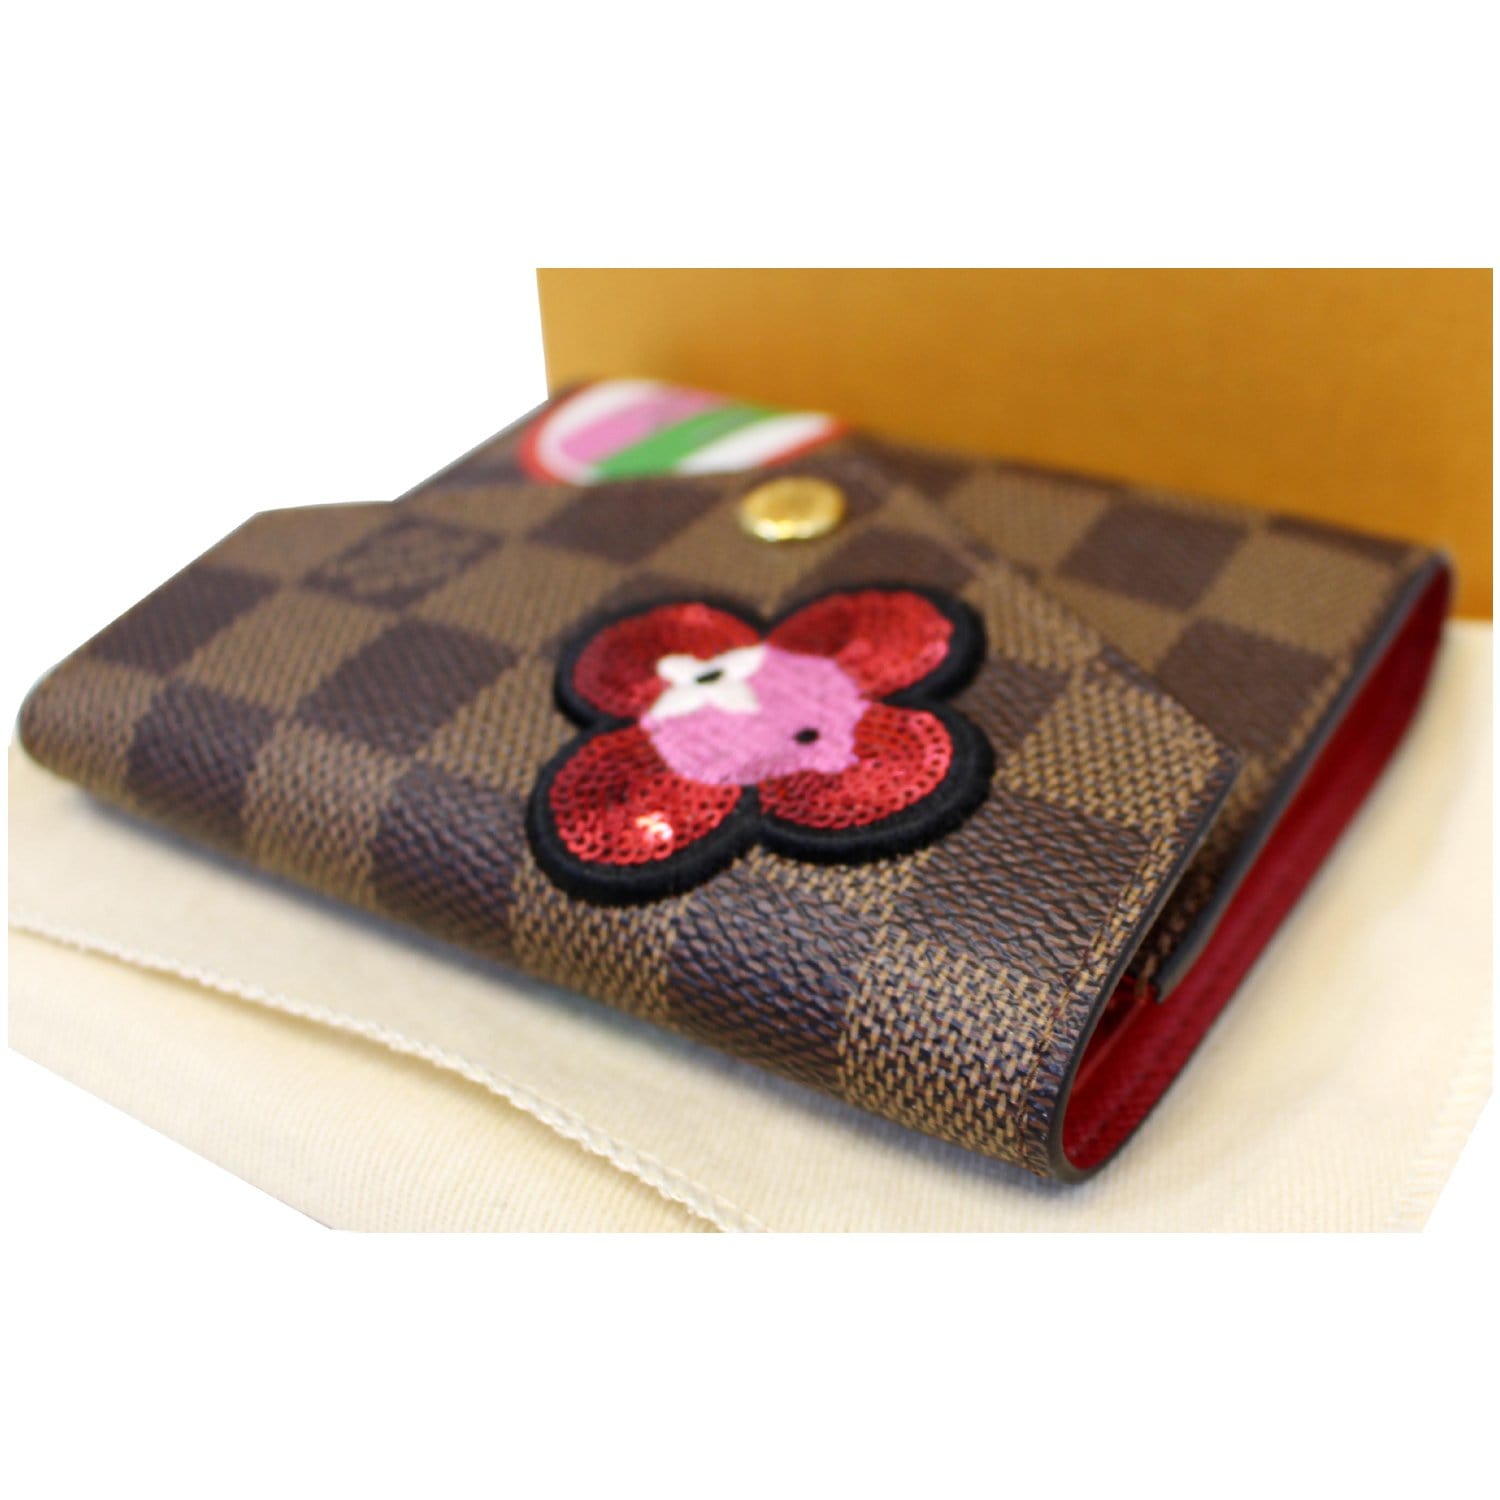 Victorine cloth wallet Louis Vuitton Brown in Cloth - 32664592